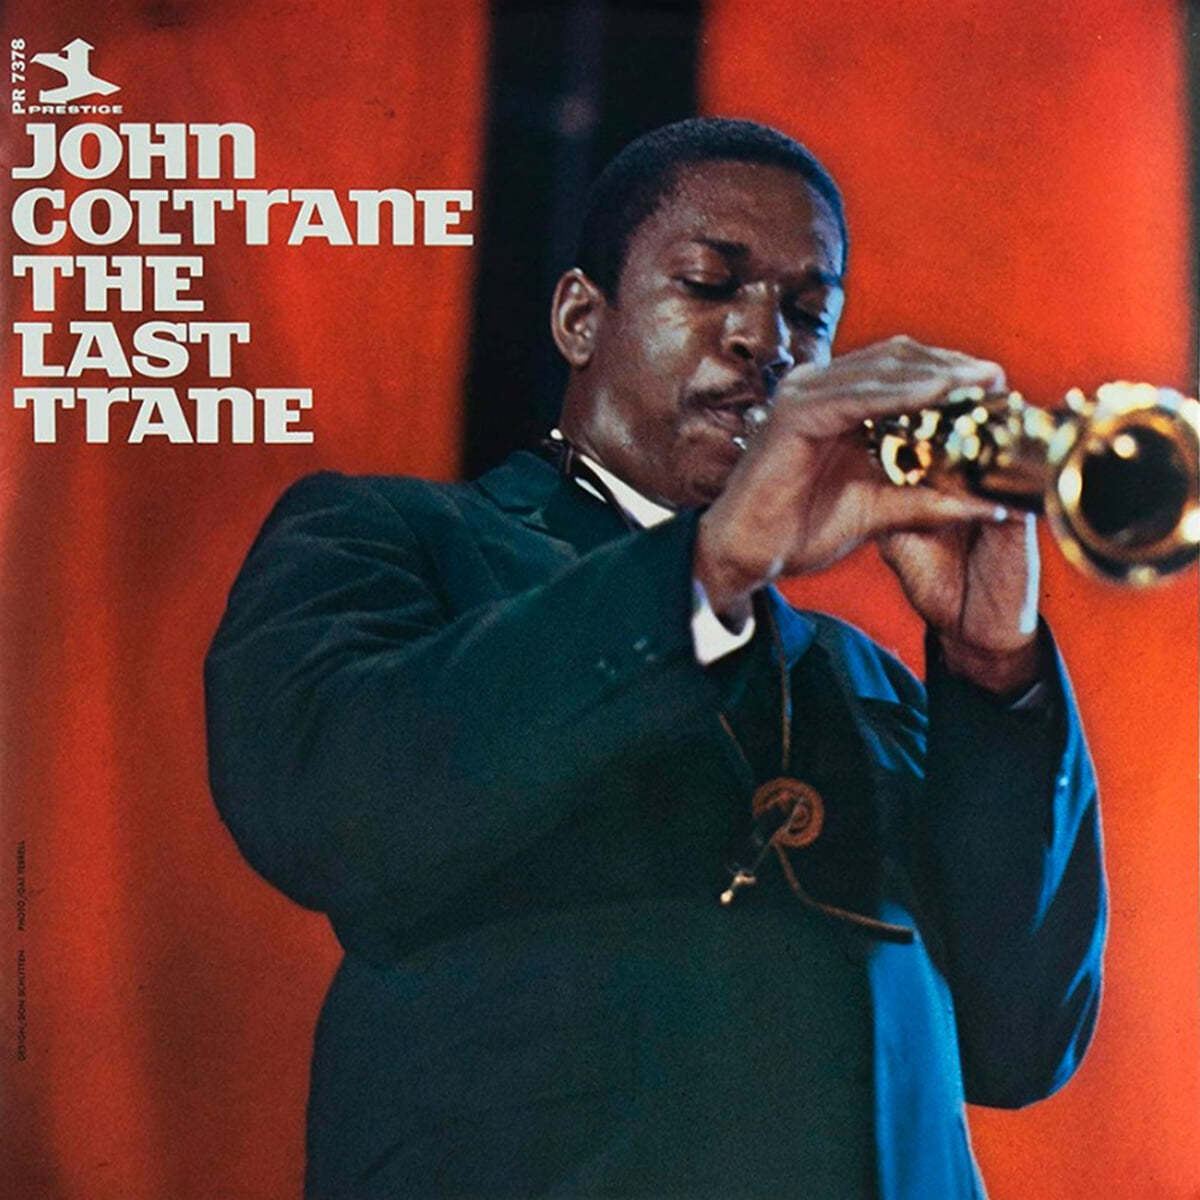 John Coltrane (존 콜트레인) - The Last Trane [LP]